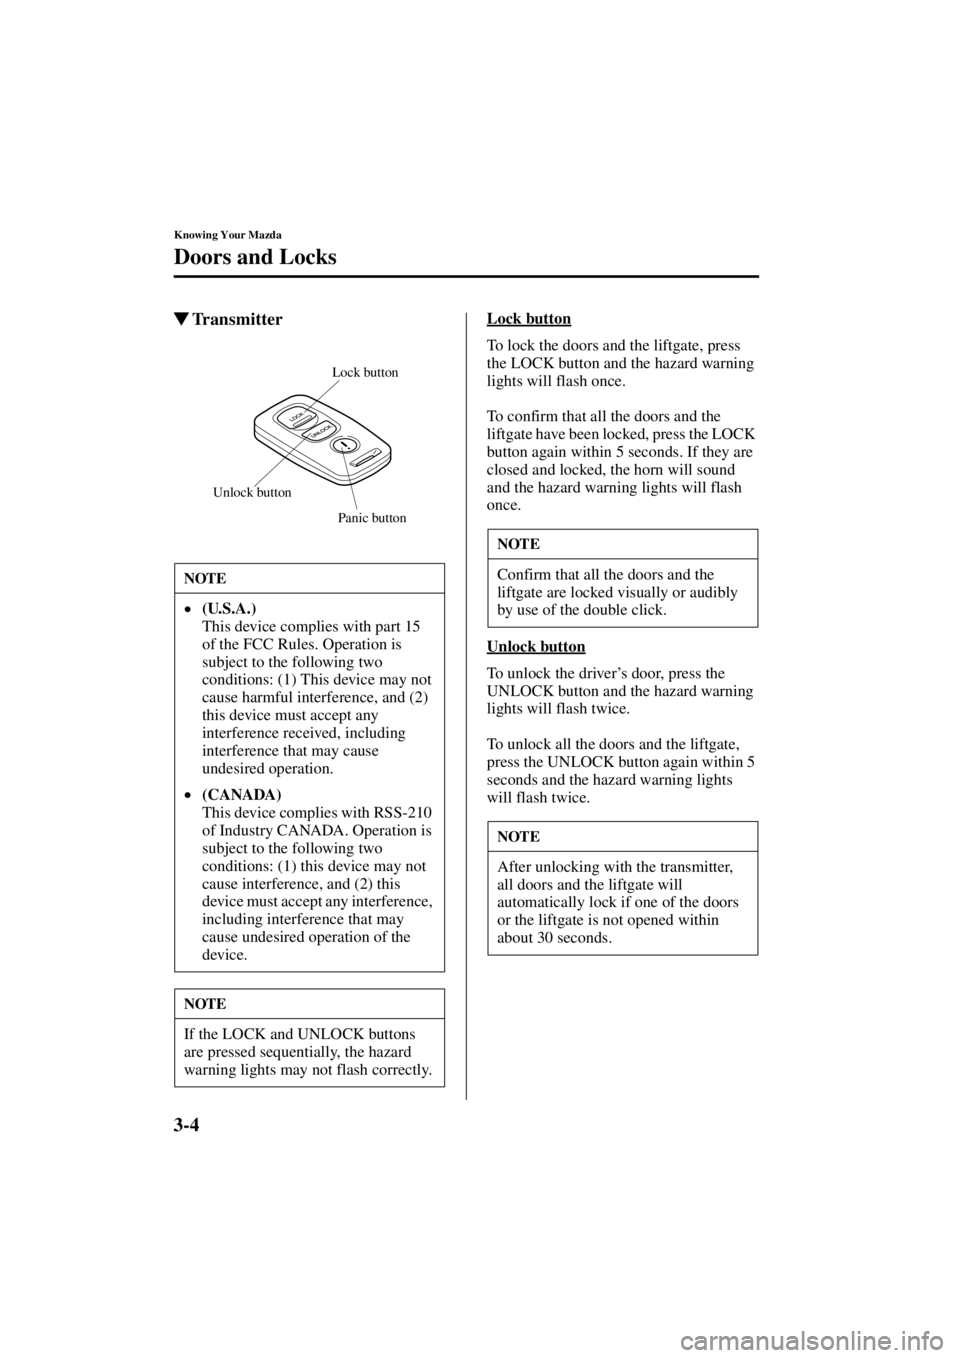 MAZDA MODEL 3 5-DOOR 2004 Manual PDF 3-4
Knowing Your Mazda
Doors and Locks
Form No. 8S18-EA-03I
TransmitterLock button
To lock the doors and the liftgate, press 
the LOCK button and the hazard warning 
lights will flash once.
To confir